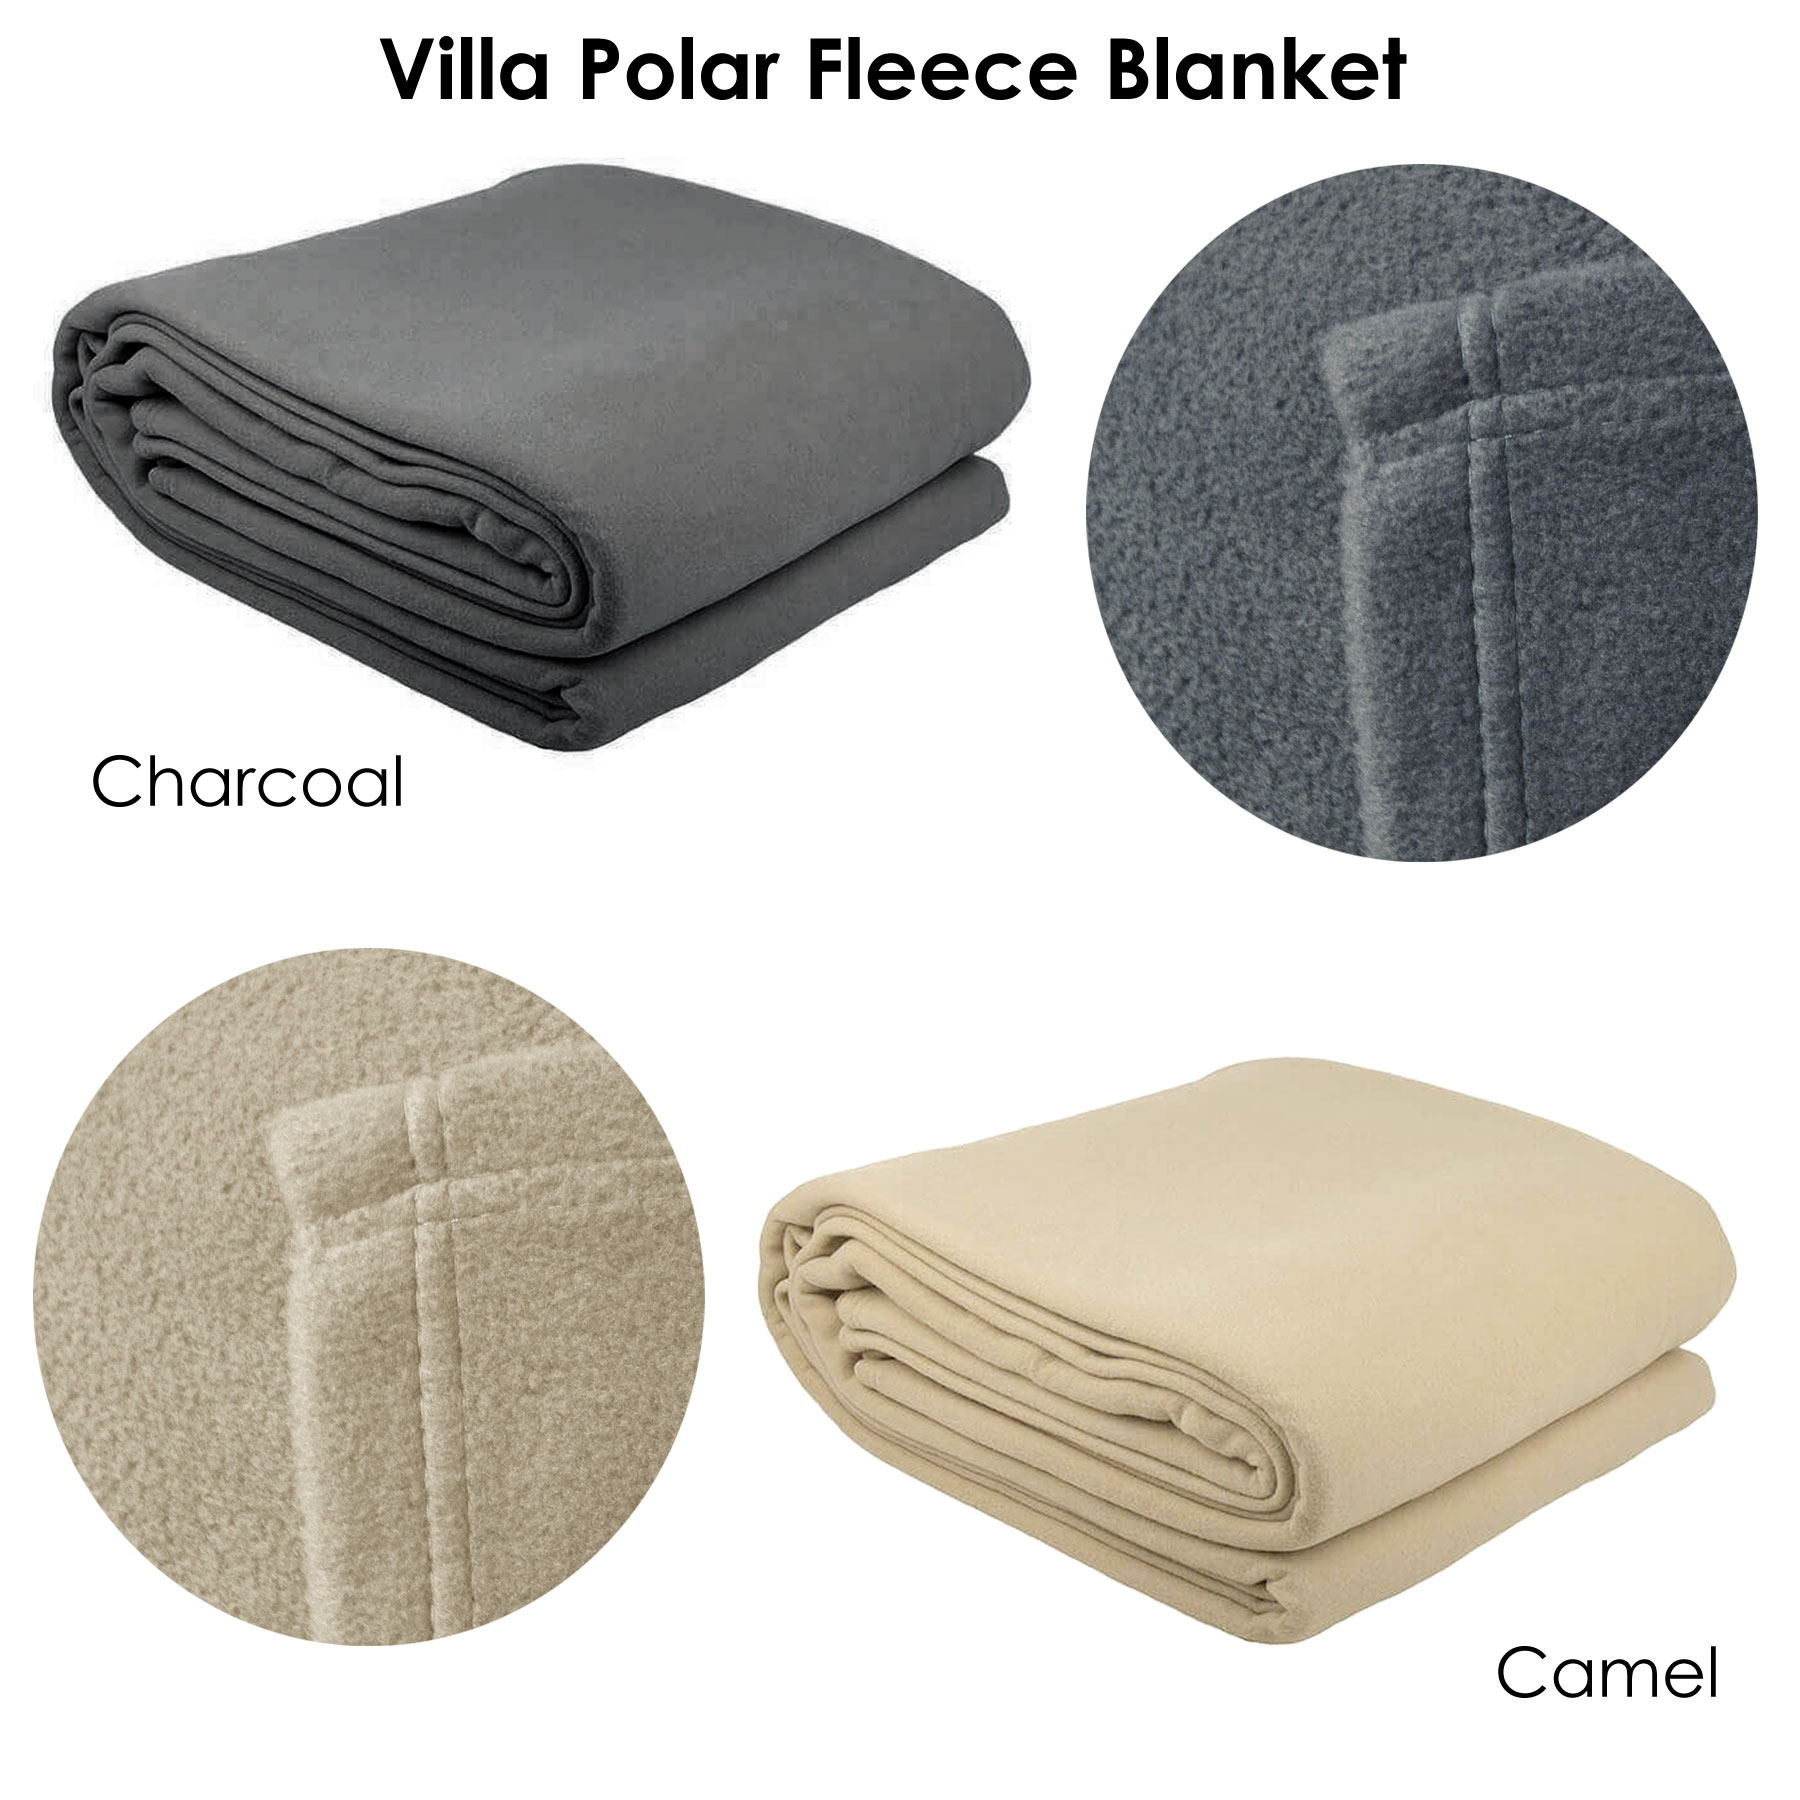 Commercial Quality Villa 300gsm Polar Fleece Blanket By Bambury EBay